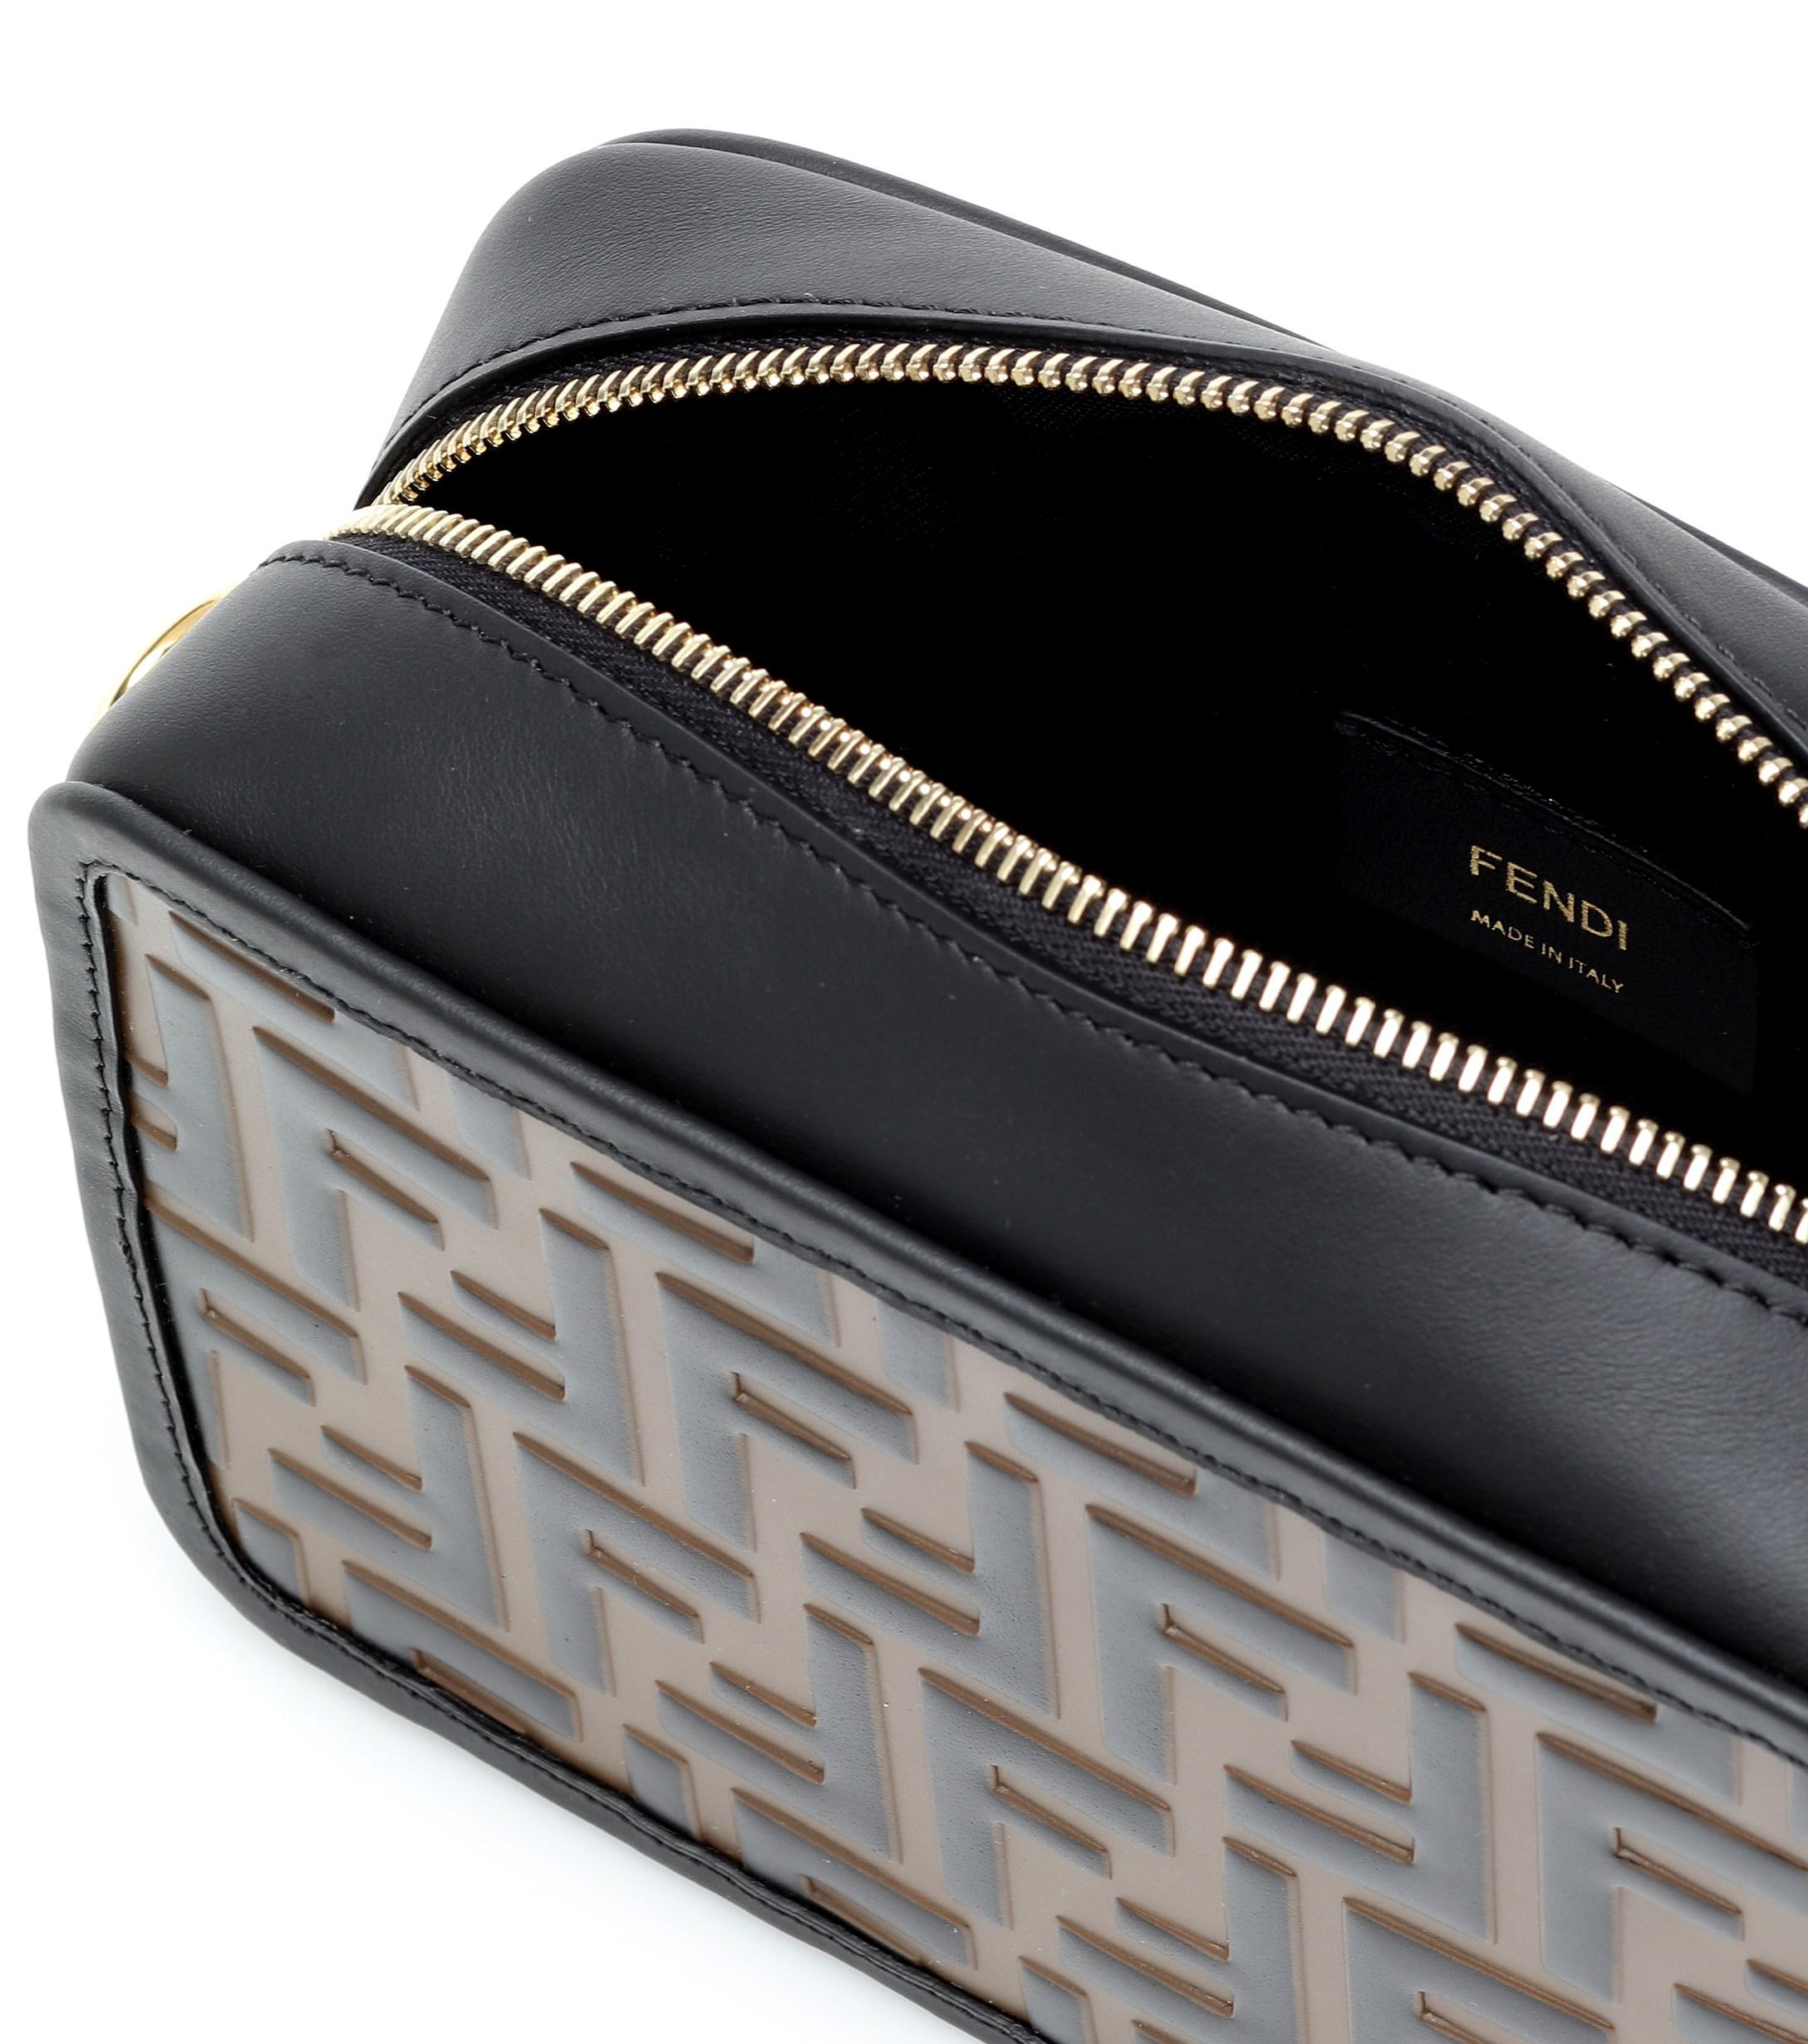 Fendi Canvas Mini Camera Case Leather Shoulder Bag in Black - Lyst